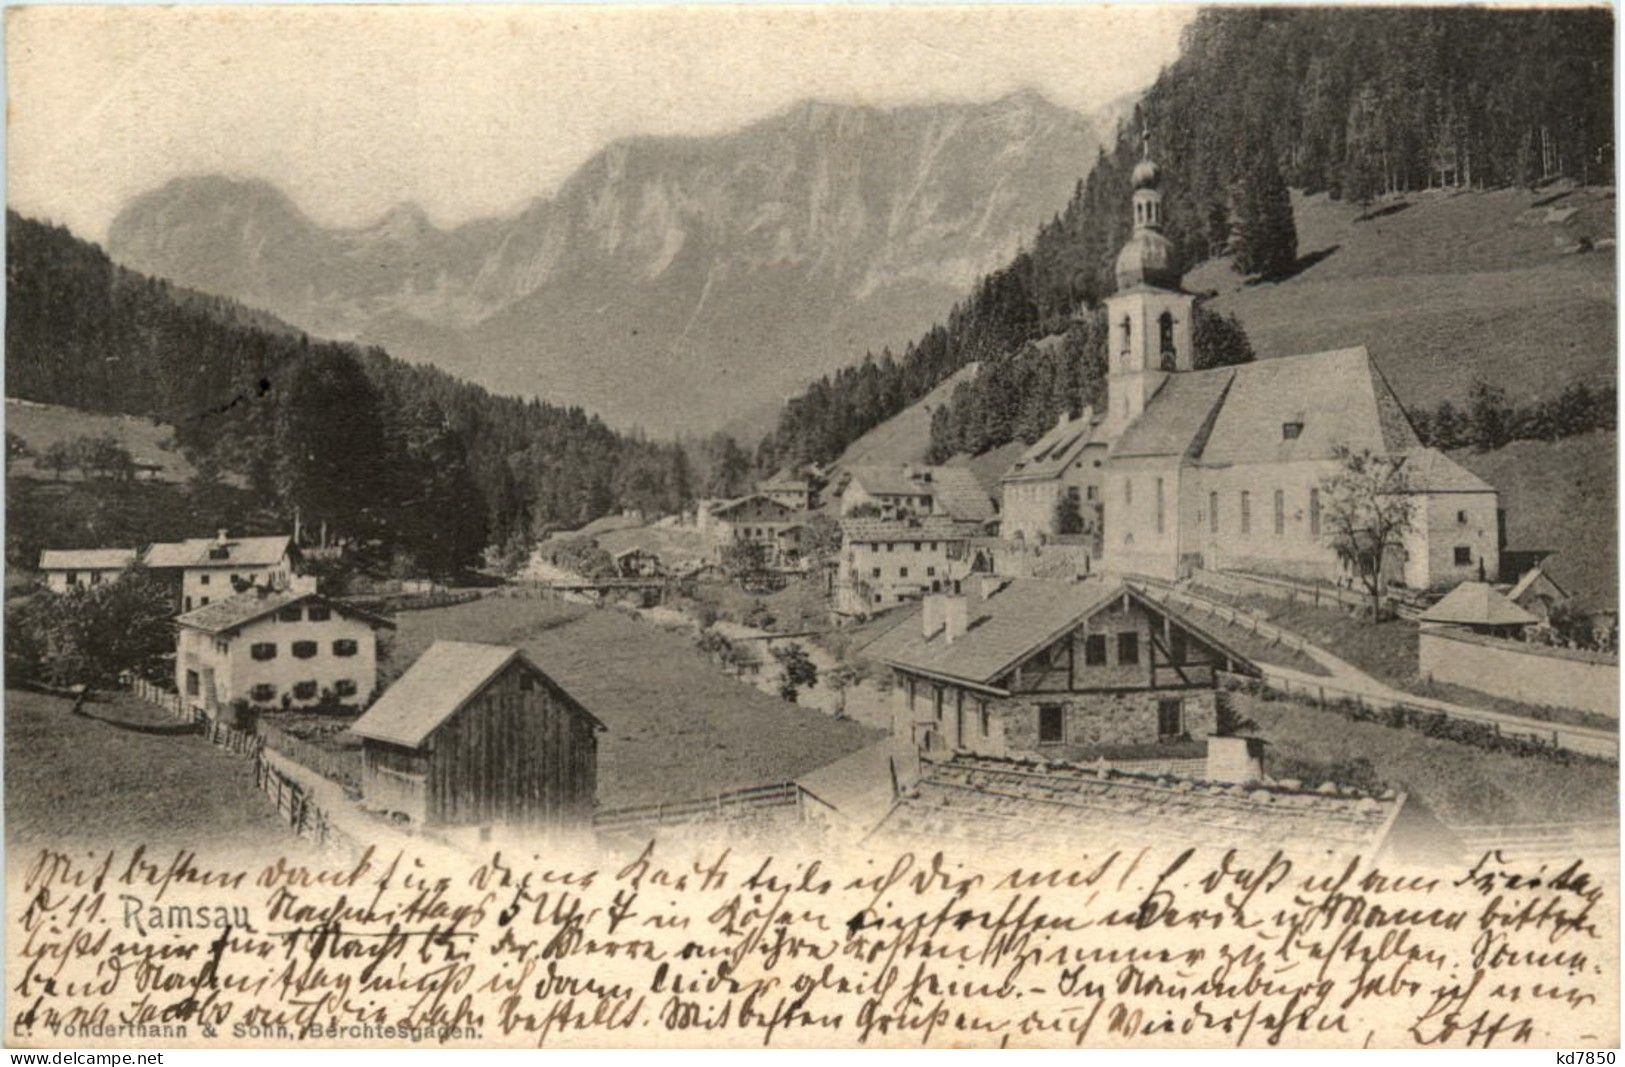 Ramsau - Berchtesgaden